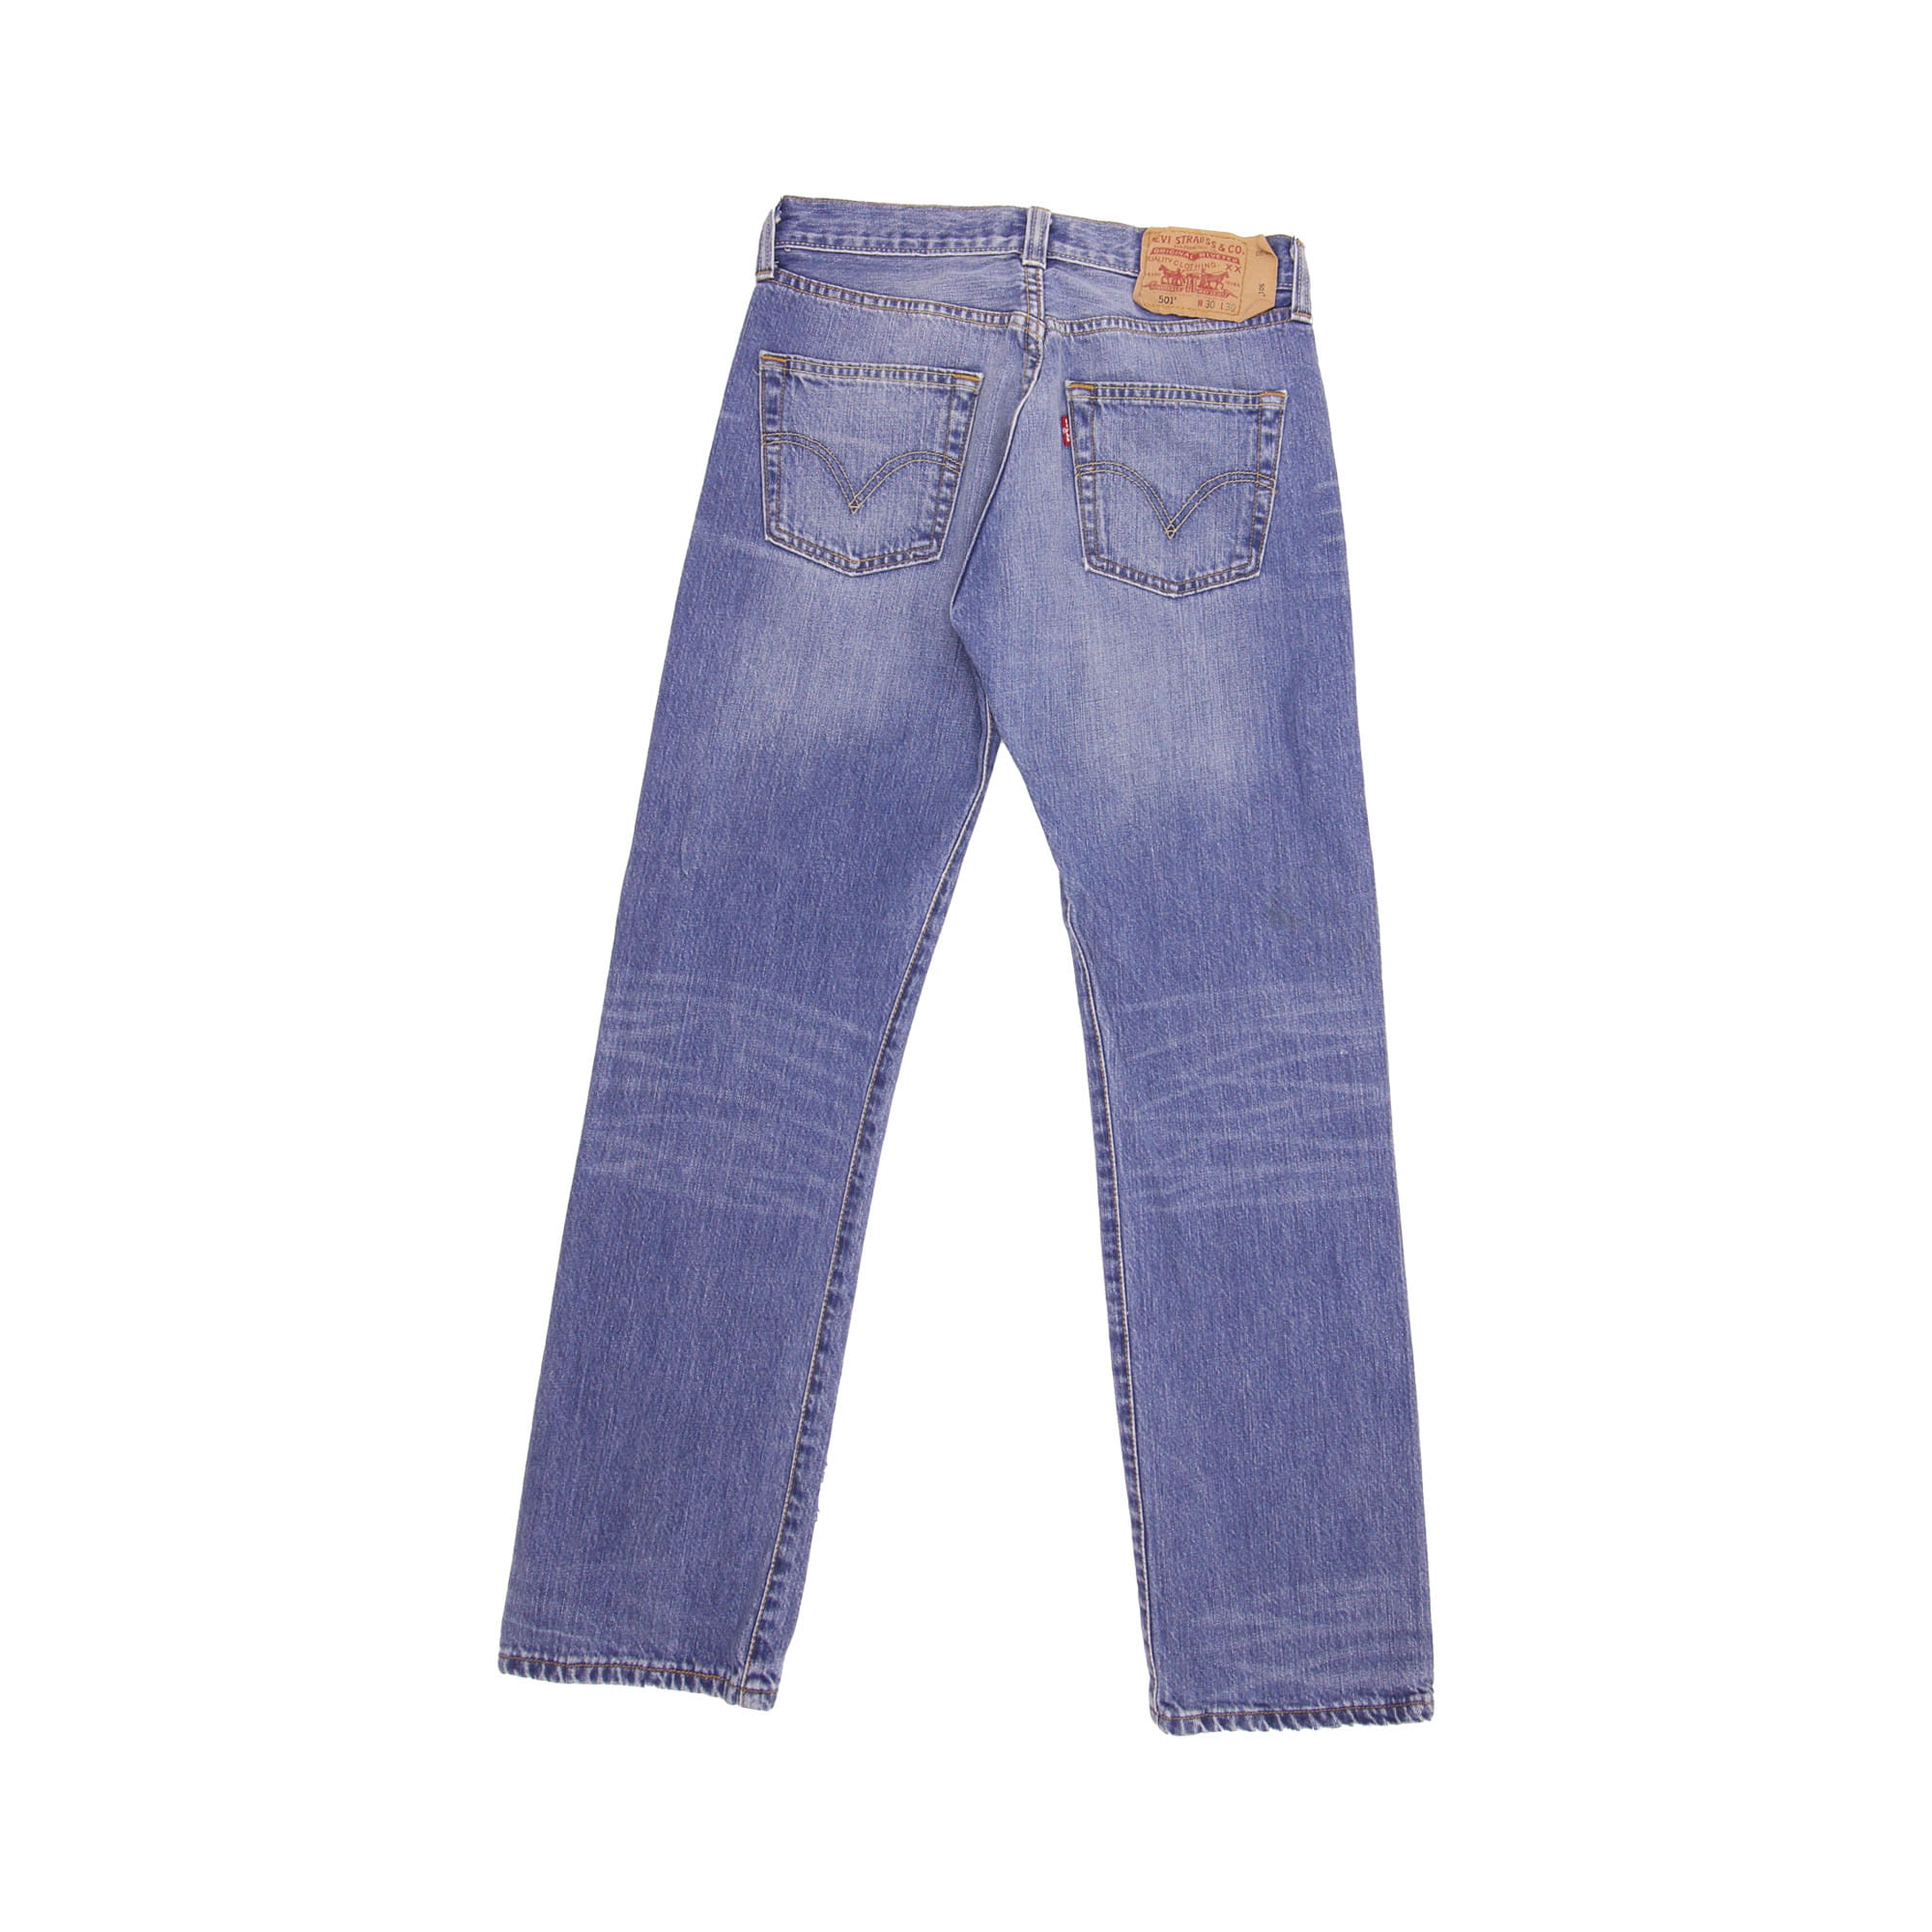 Levi's 501 Jeans -  W30 L30